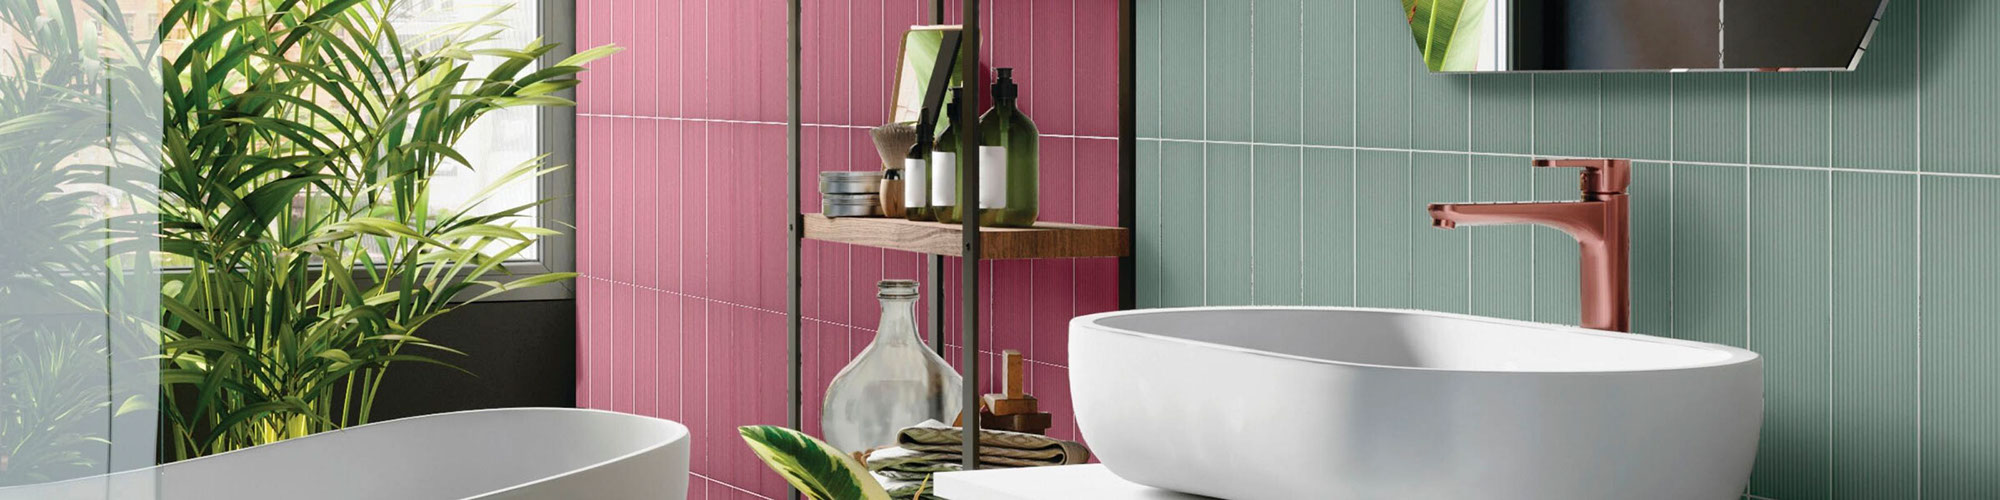 Colorful bathroom with soaker tub, light green & maroon backsplash, floating wood vanity with vessel sink.